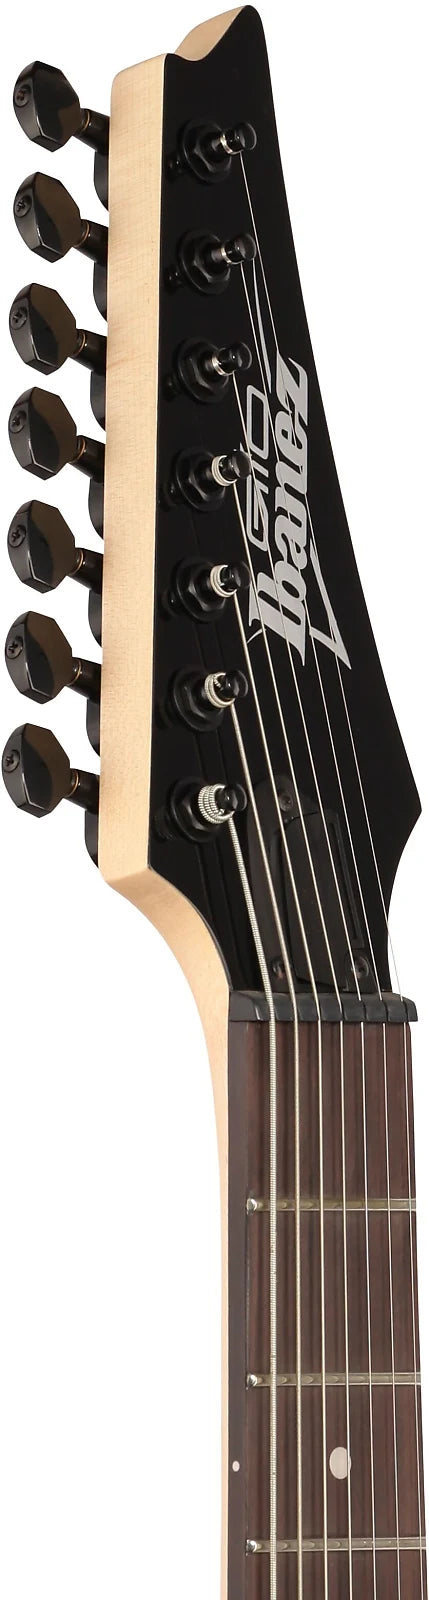 Ibanez GRG7221 7 String Electric Guitar White